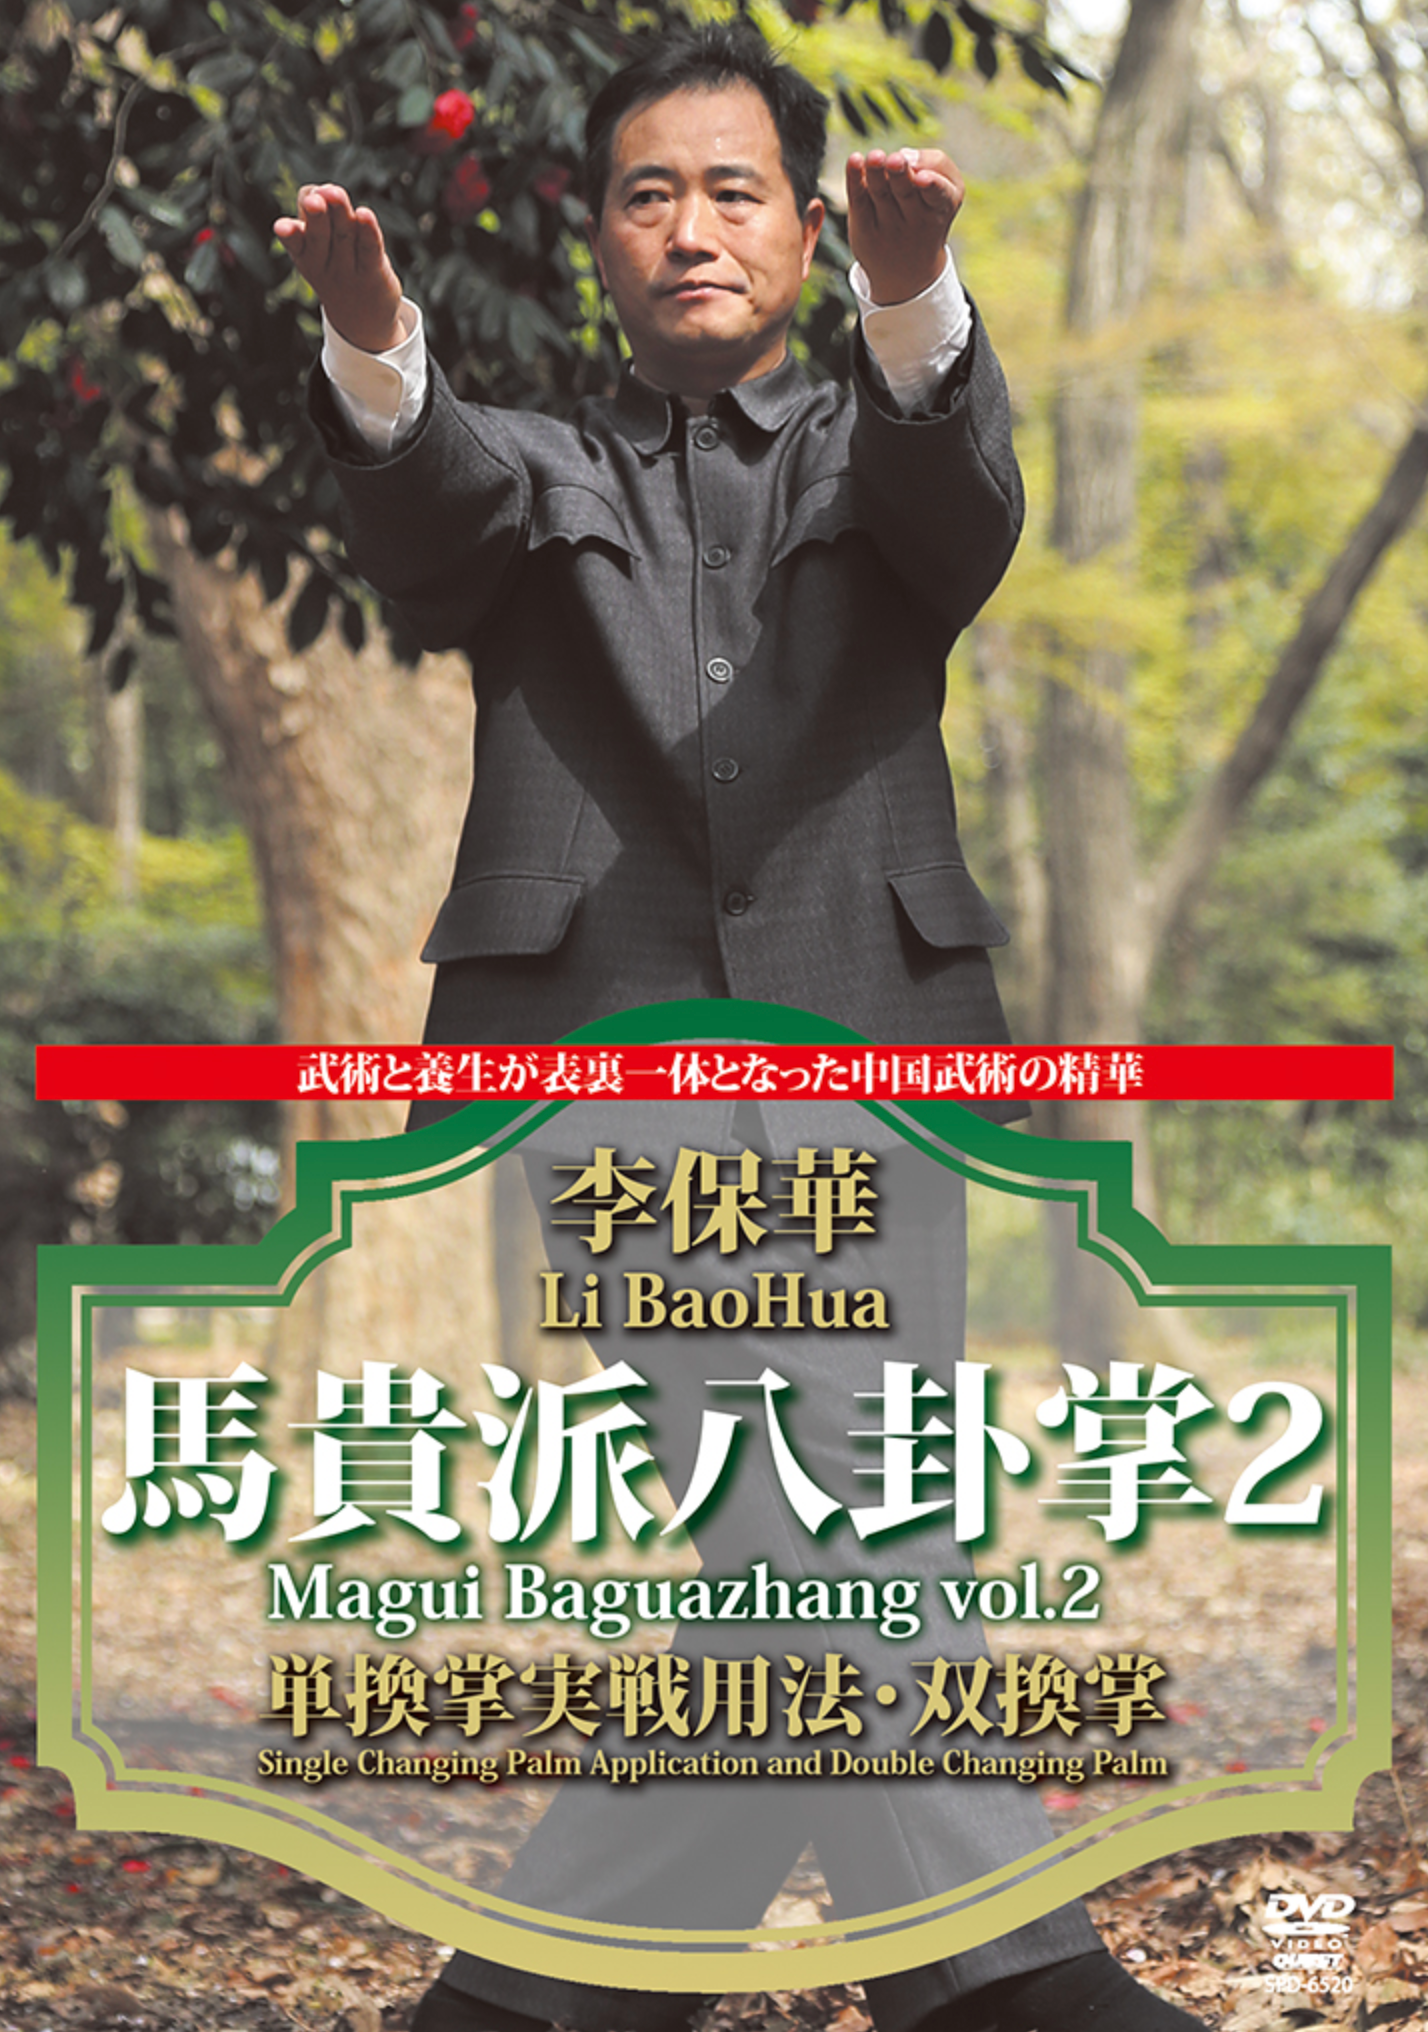 Magui Baguazhang Vol 2 DVD by Li BaoHua - Budovideos Inc